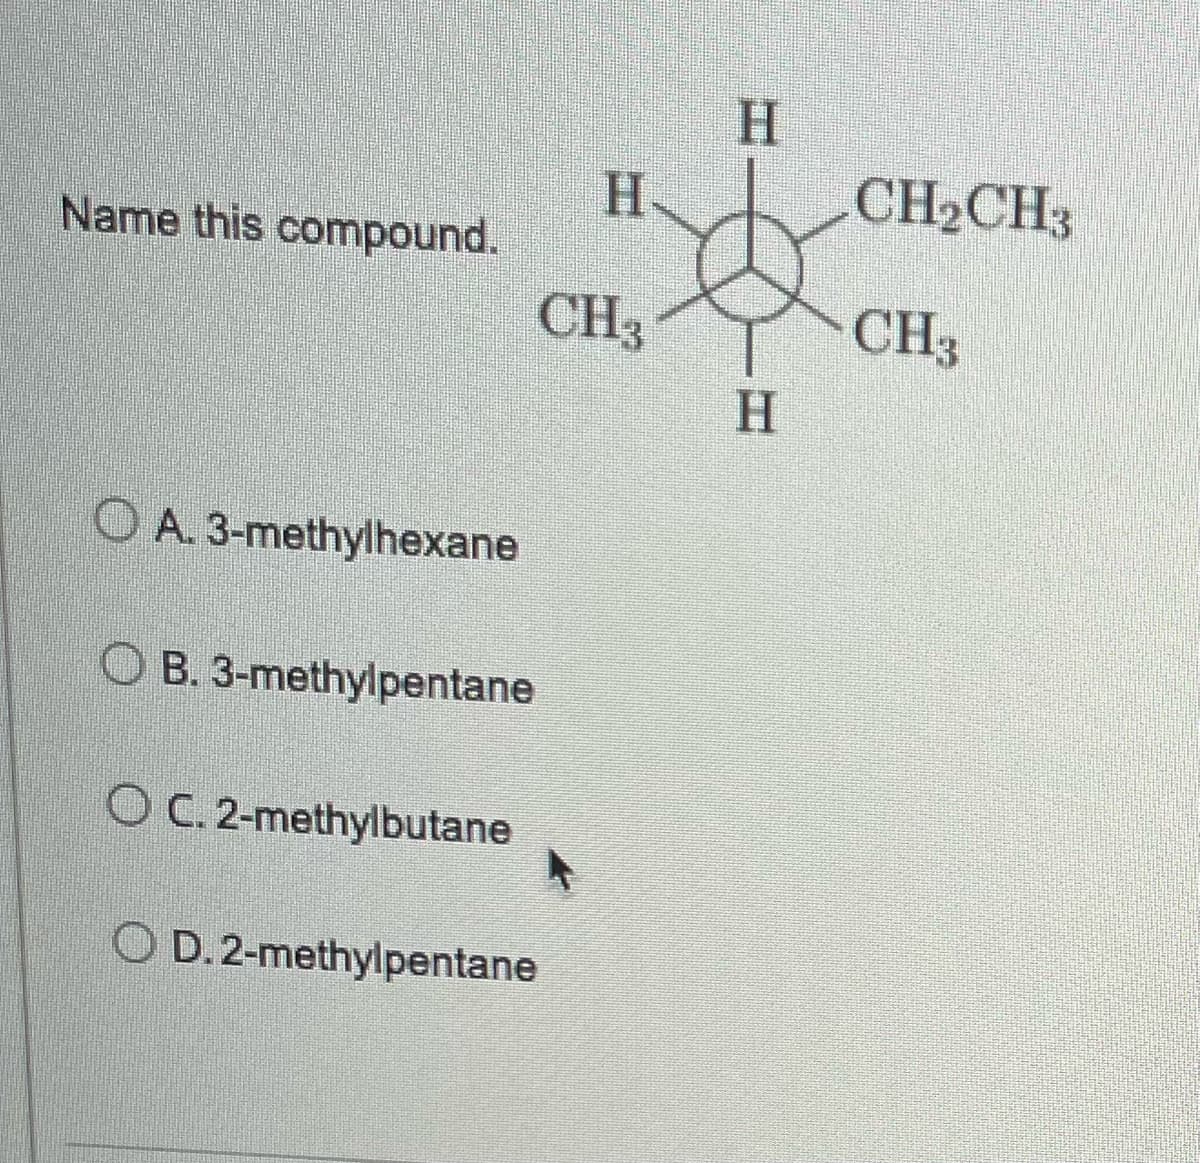 H
CH3
Name this compound.
OA. 3-methylhexane
OB. 3-methylpentane
OC. 2-methylbutane
4
OD. 2-methylpentane
H
H
CH₂CH3
CH3